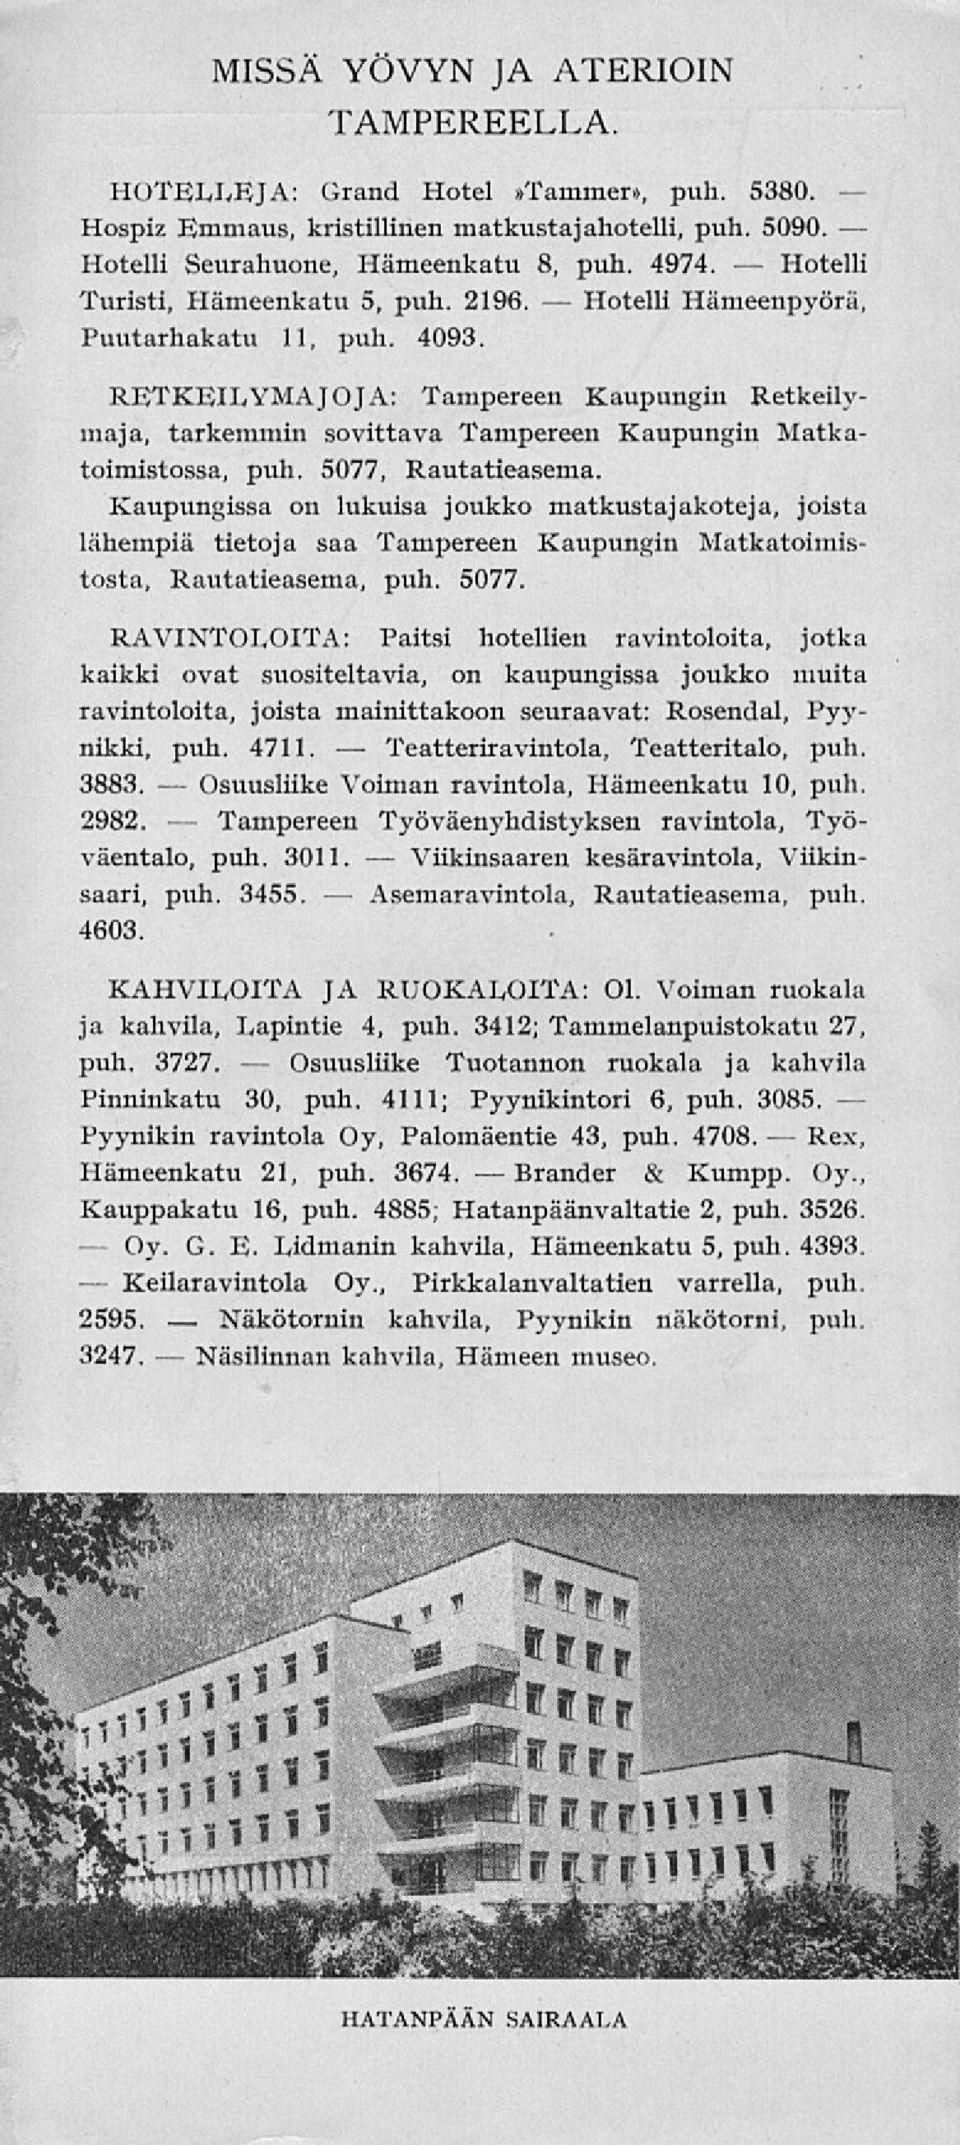 RETKEILYMAJOJA: Tampereen Kaupungin Retkeilymaja, tarkemmin sovittava Tampereen Kaupungin Matkatoimistossa, puh. 5077, Rautatieasema.